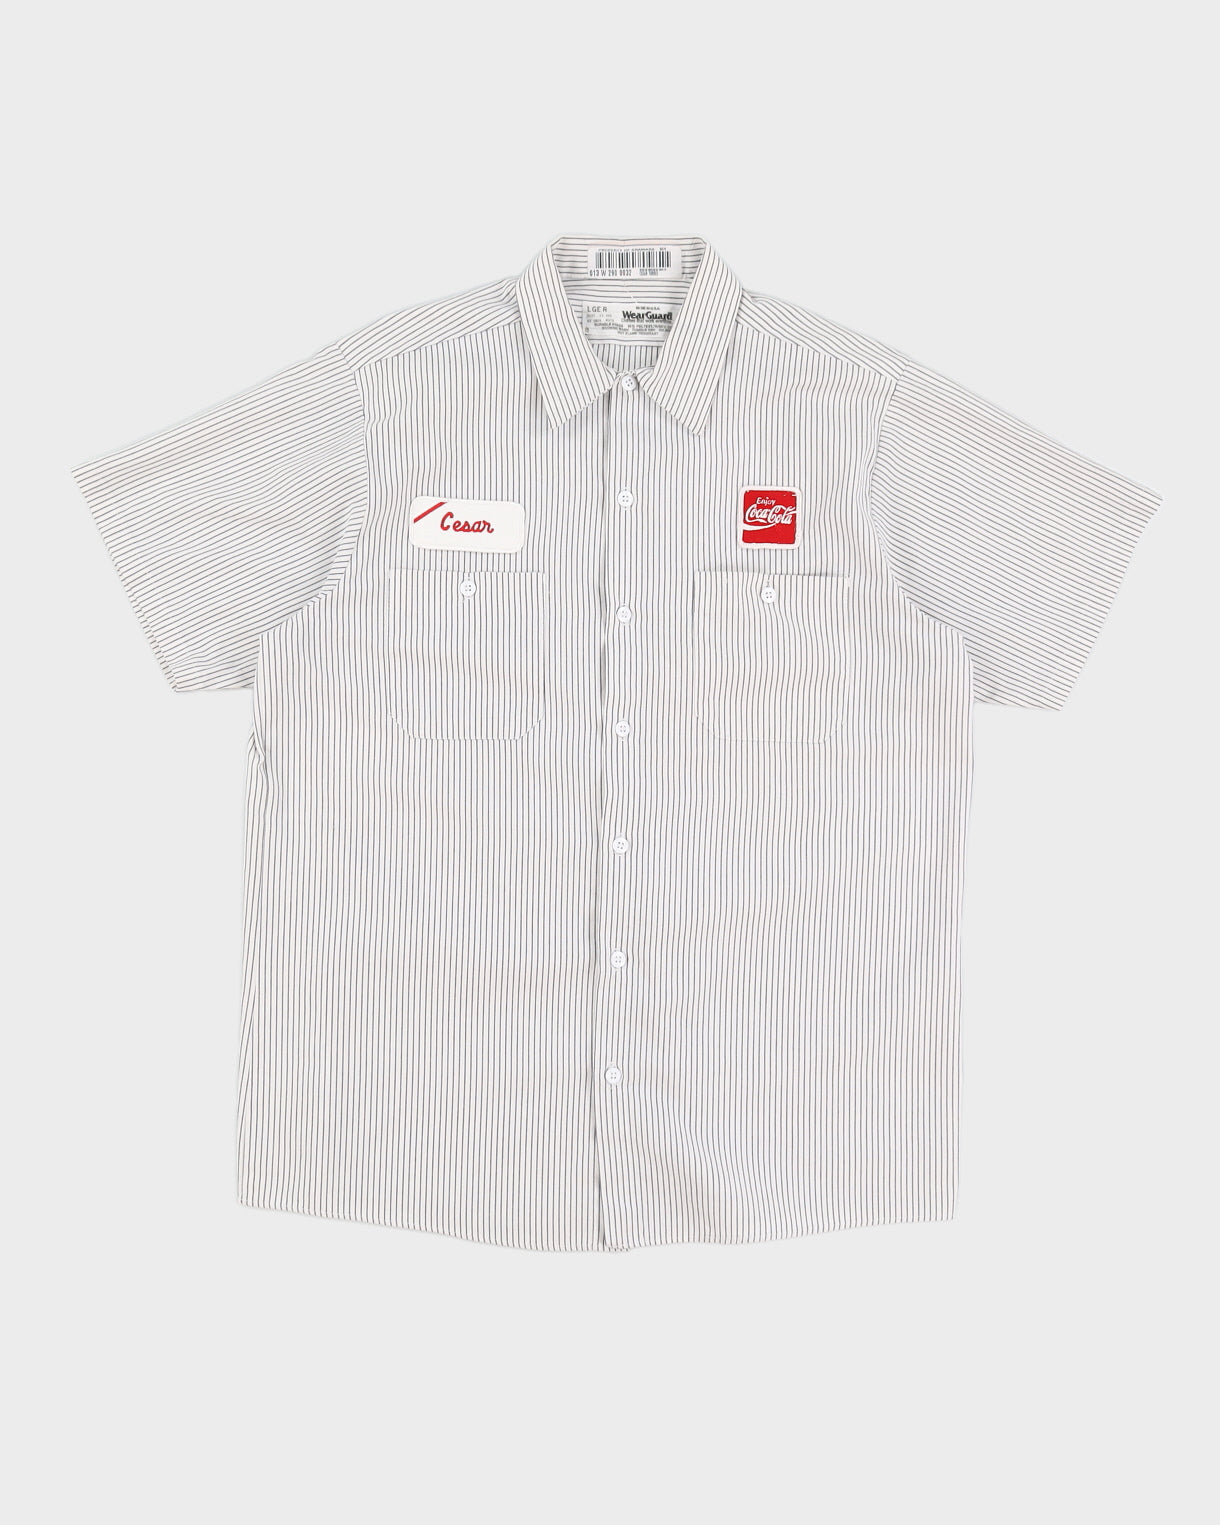 00s "Enjoy Coca-Cola" White Striped Short Sleeved Shirt - M